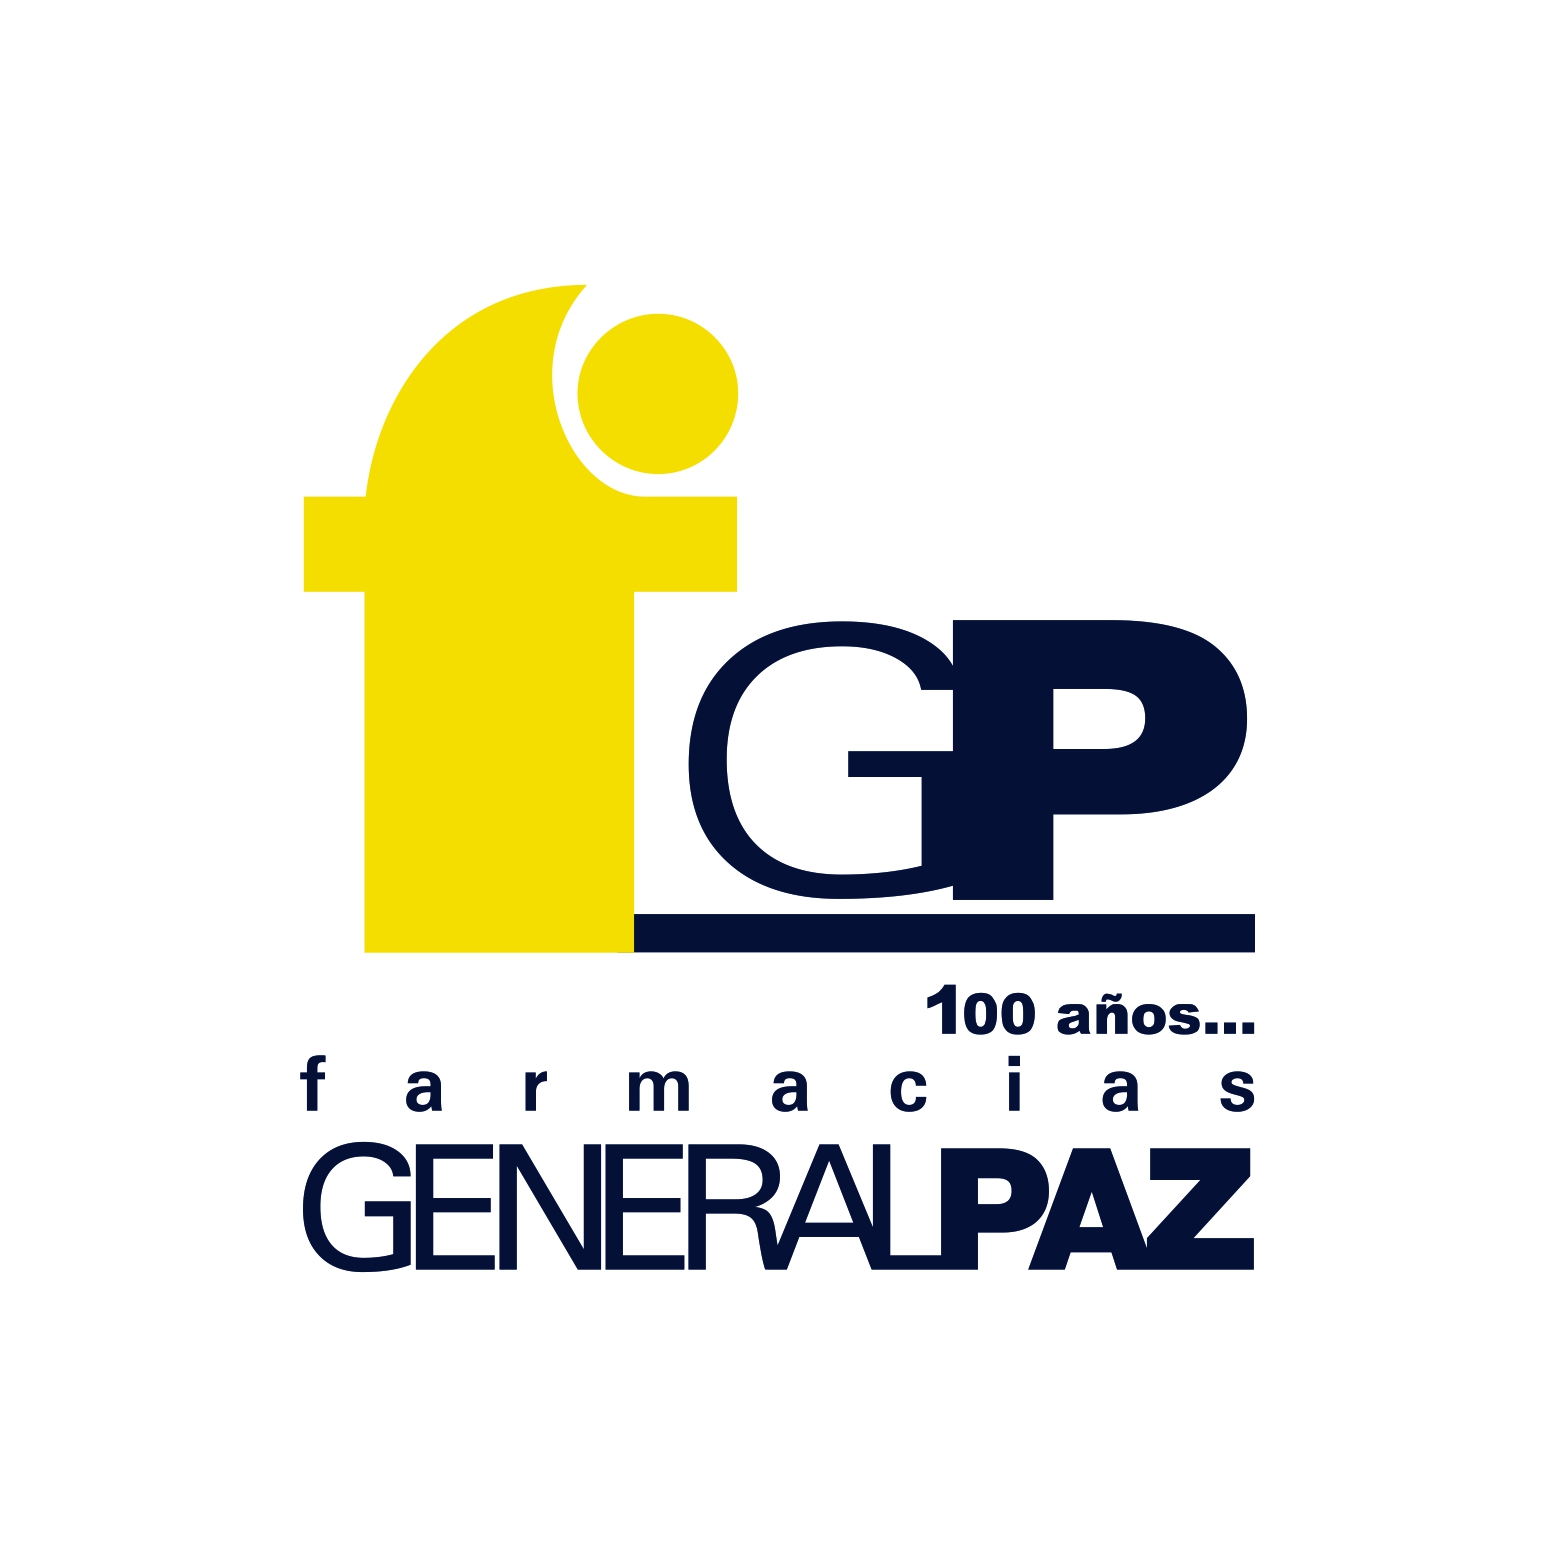 Farmacias General Paz